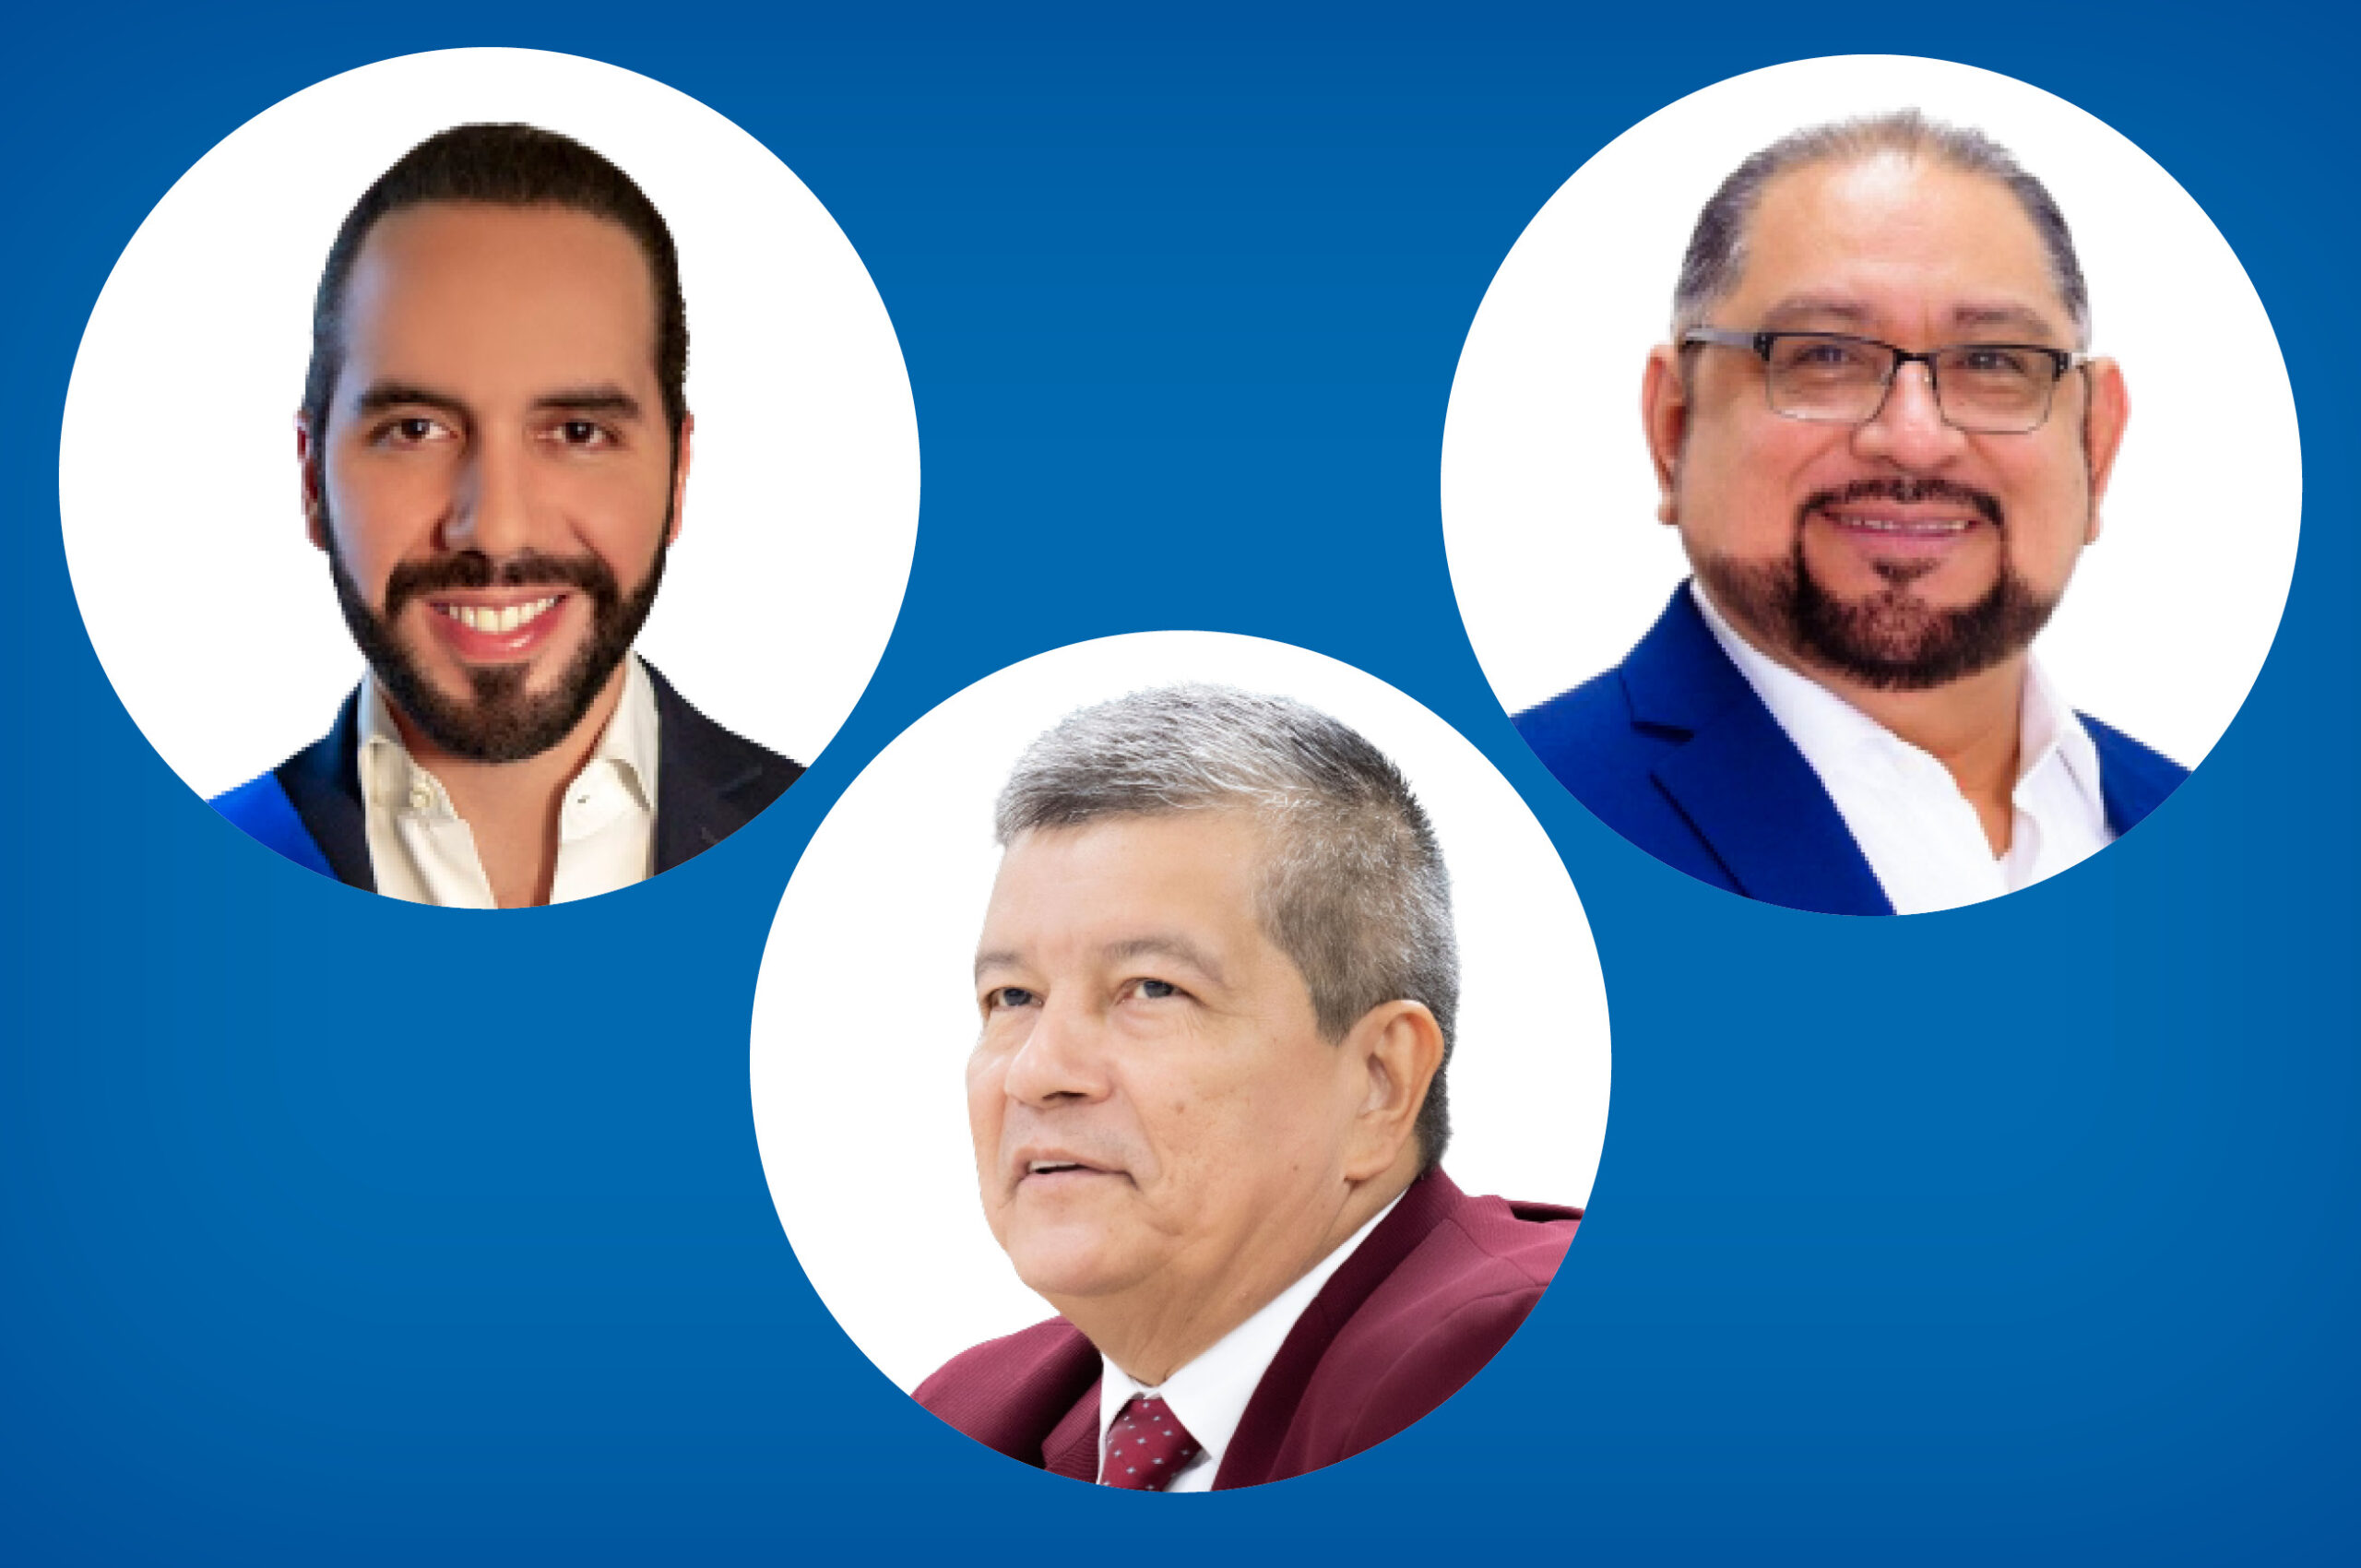 Meet the Candidates: Ecuador